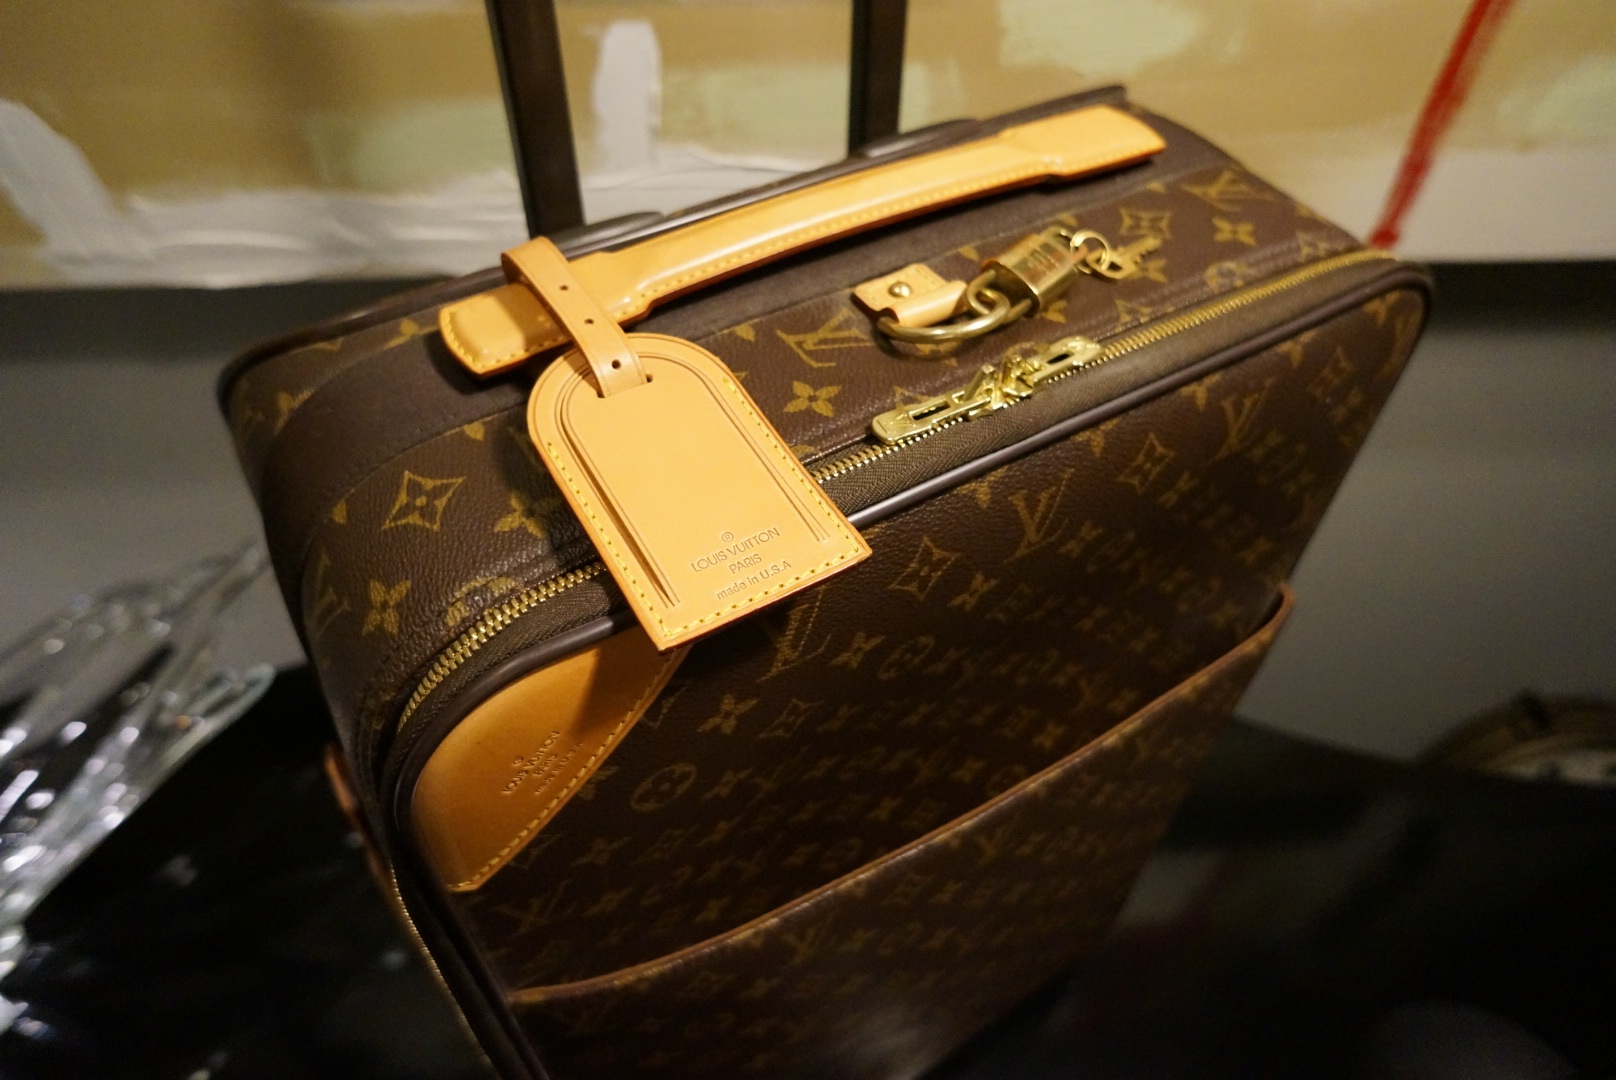 Louis Vuitton Pegase 55 Monogram Travel Carry Bag Suitcase Leather